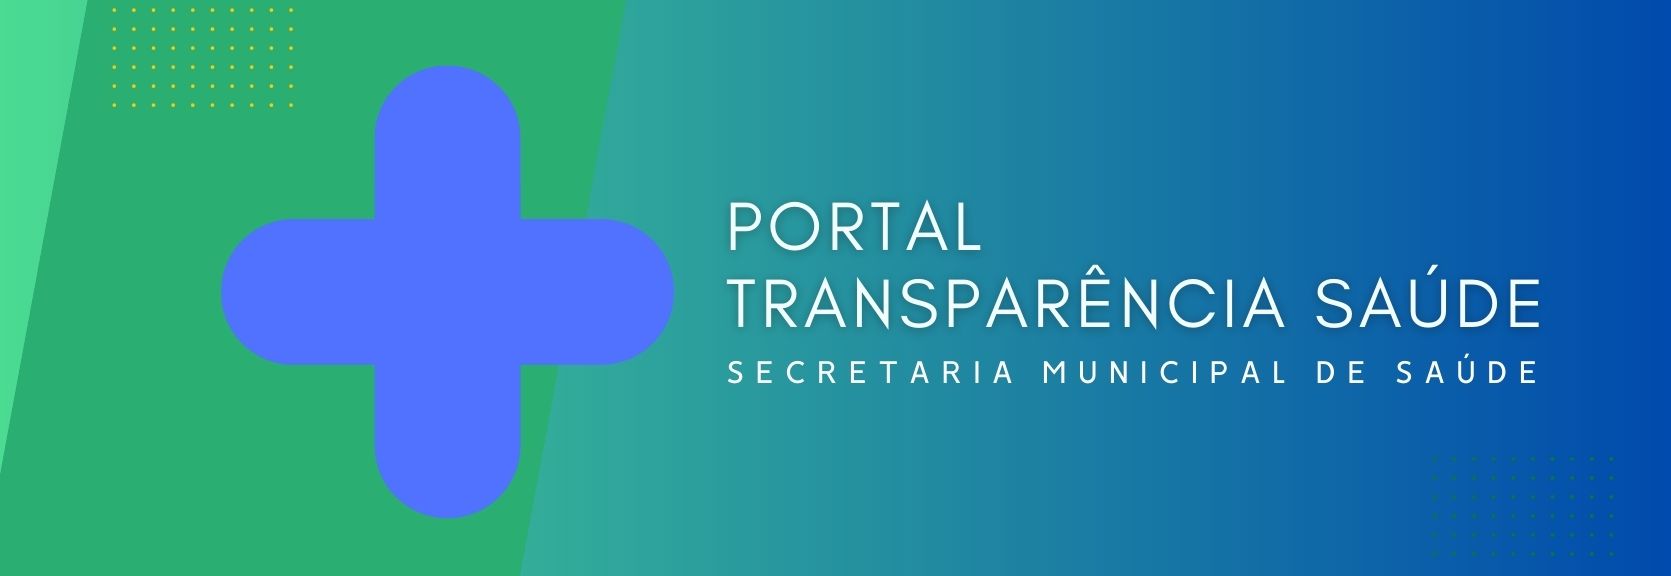 Portal da Transparência saude